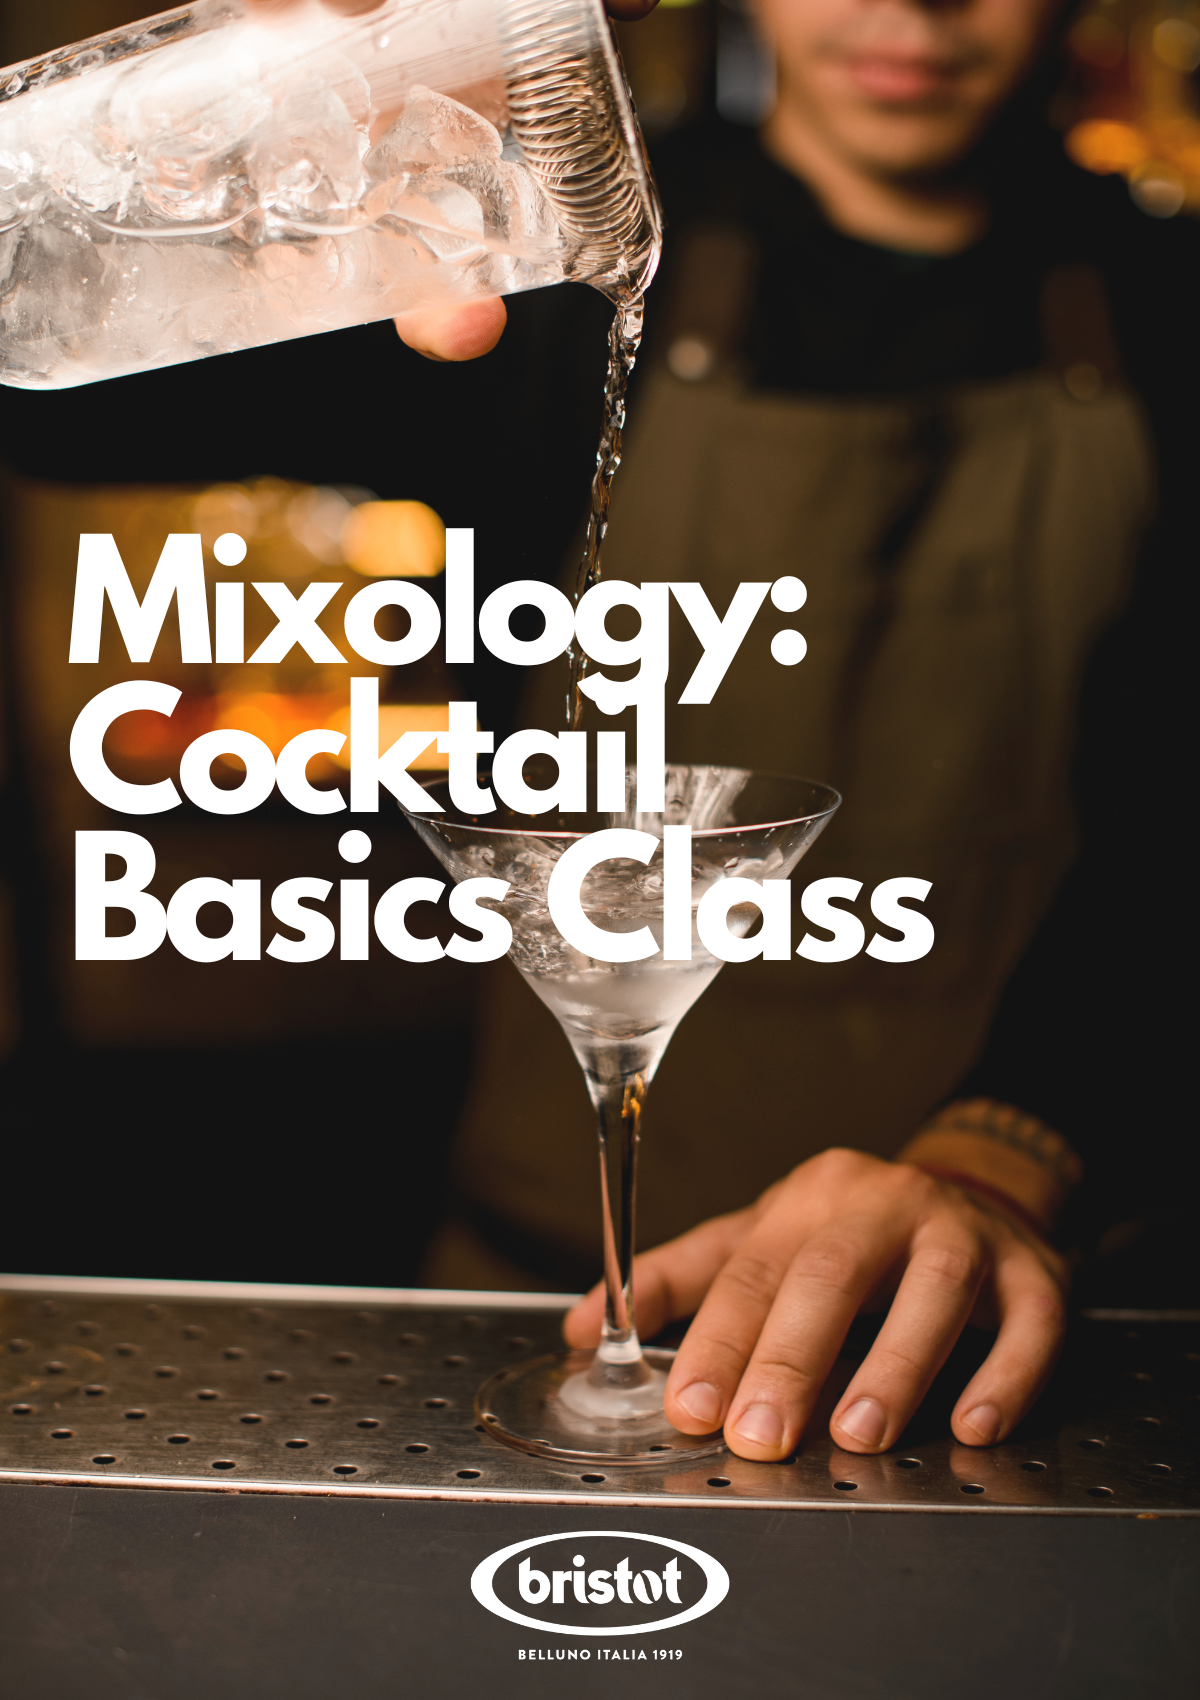 Mixology: Cocktail Basics Class